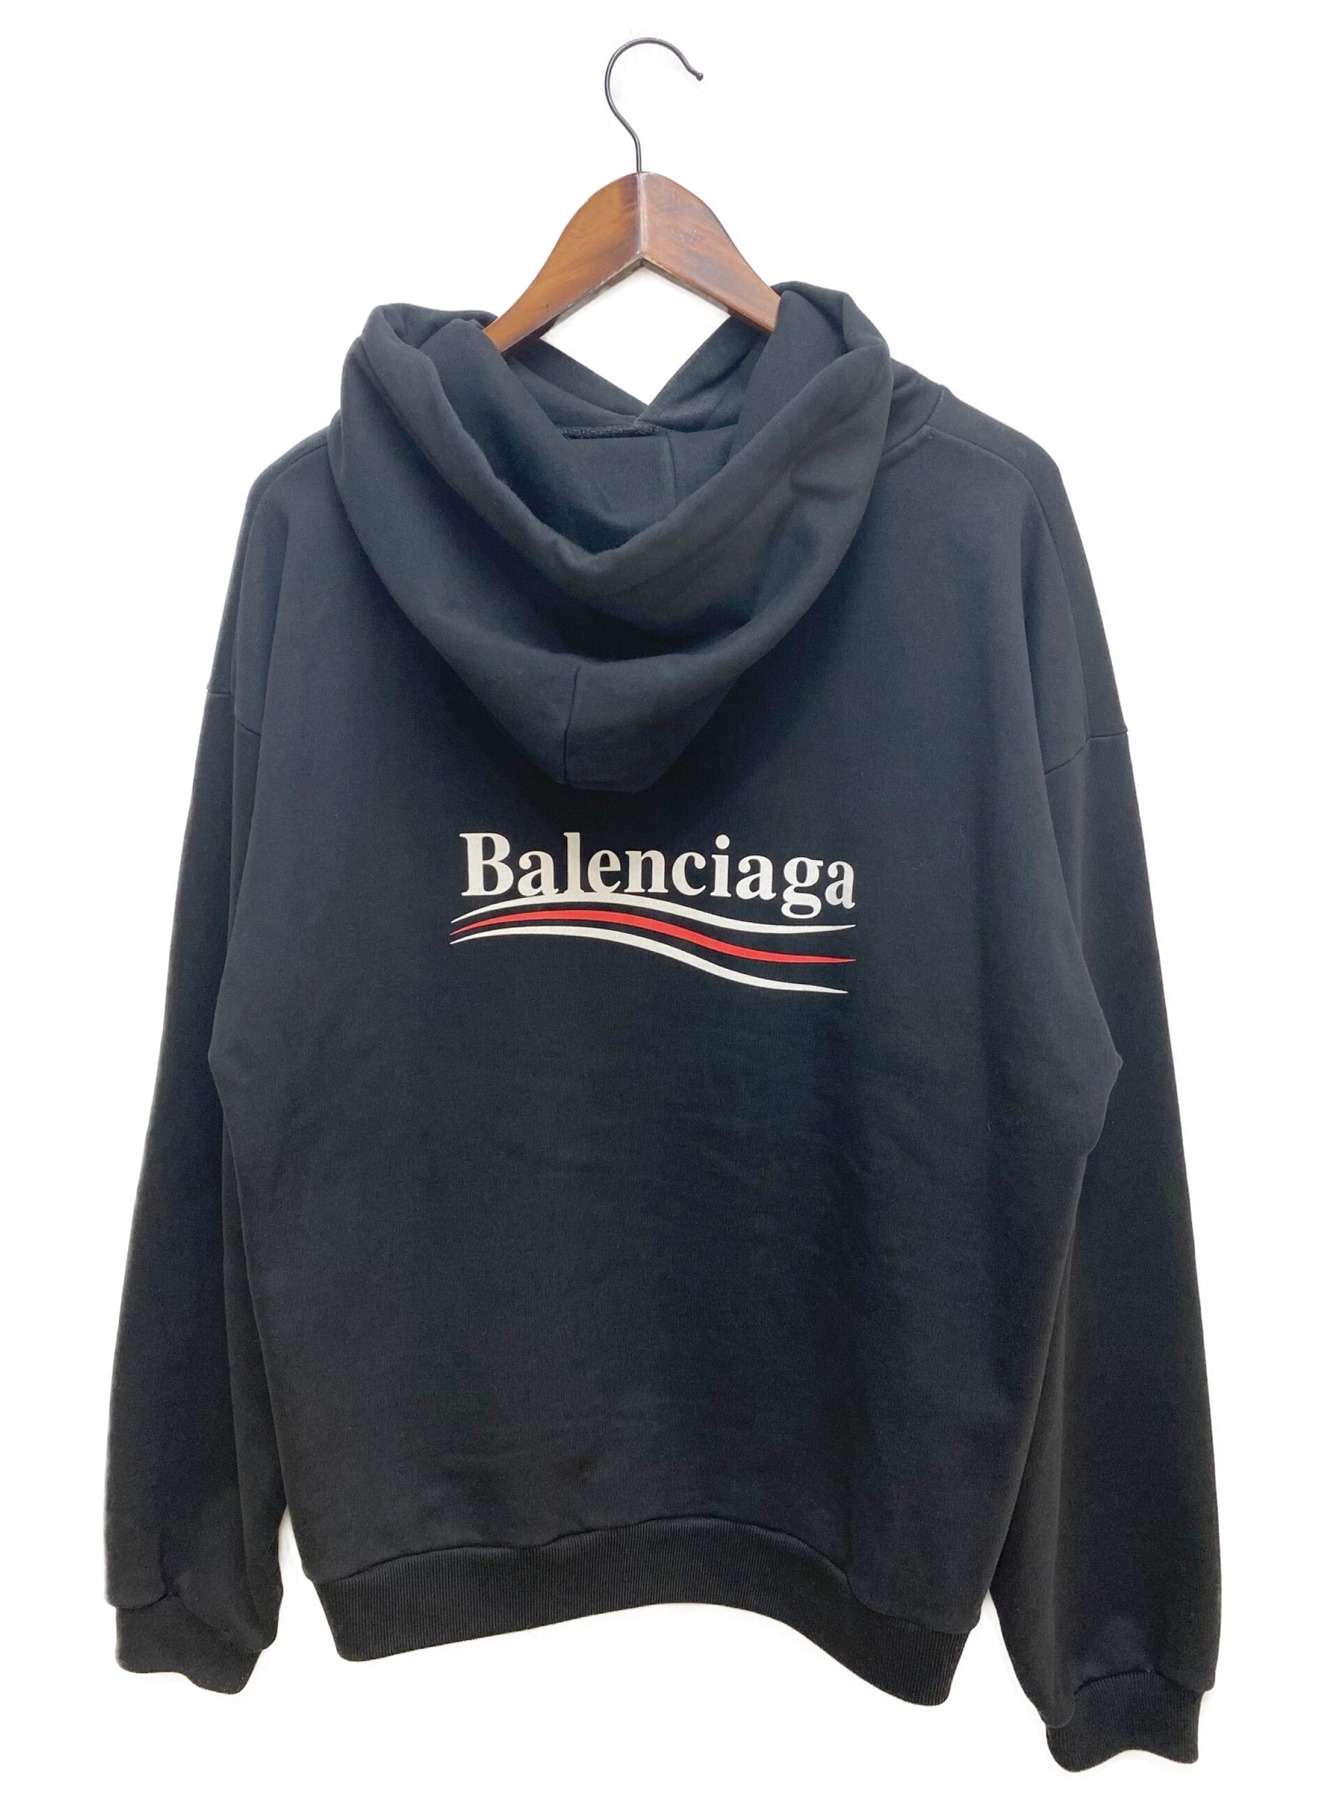 BALENCIAGA (バレンシアガ) キャンペーンロゴフーディ ブラック サイズ:XL